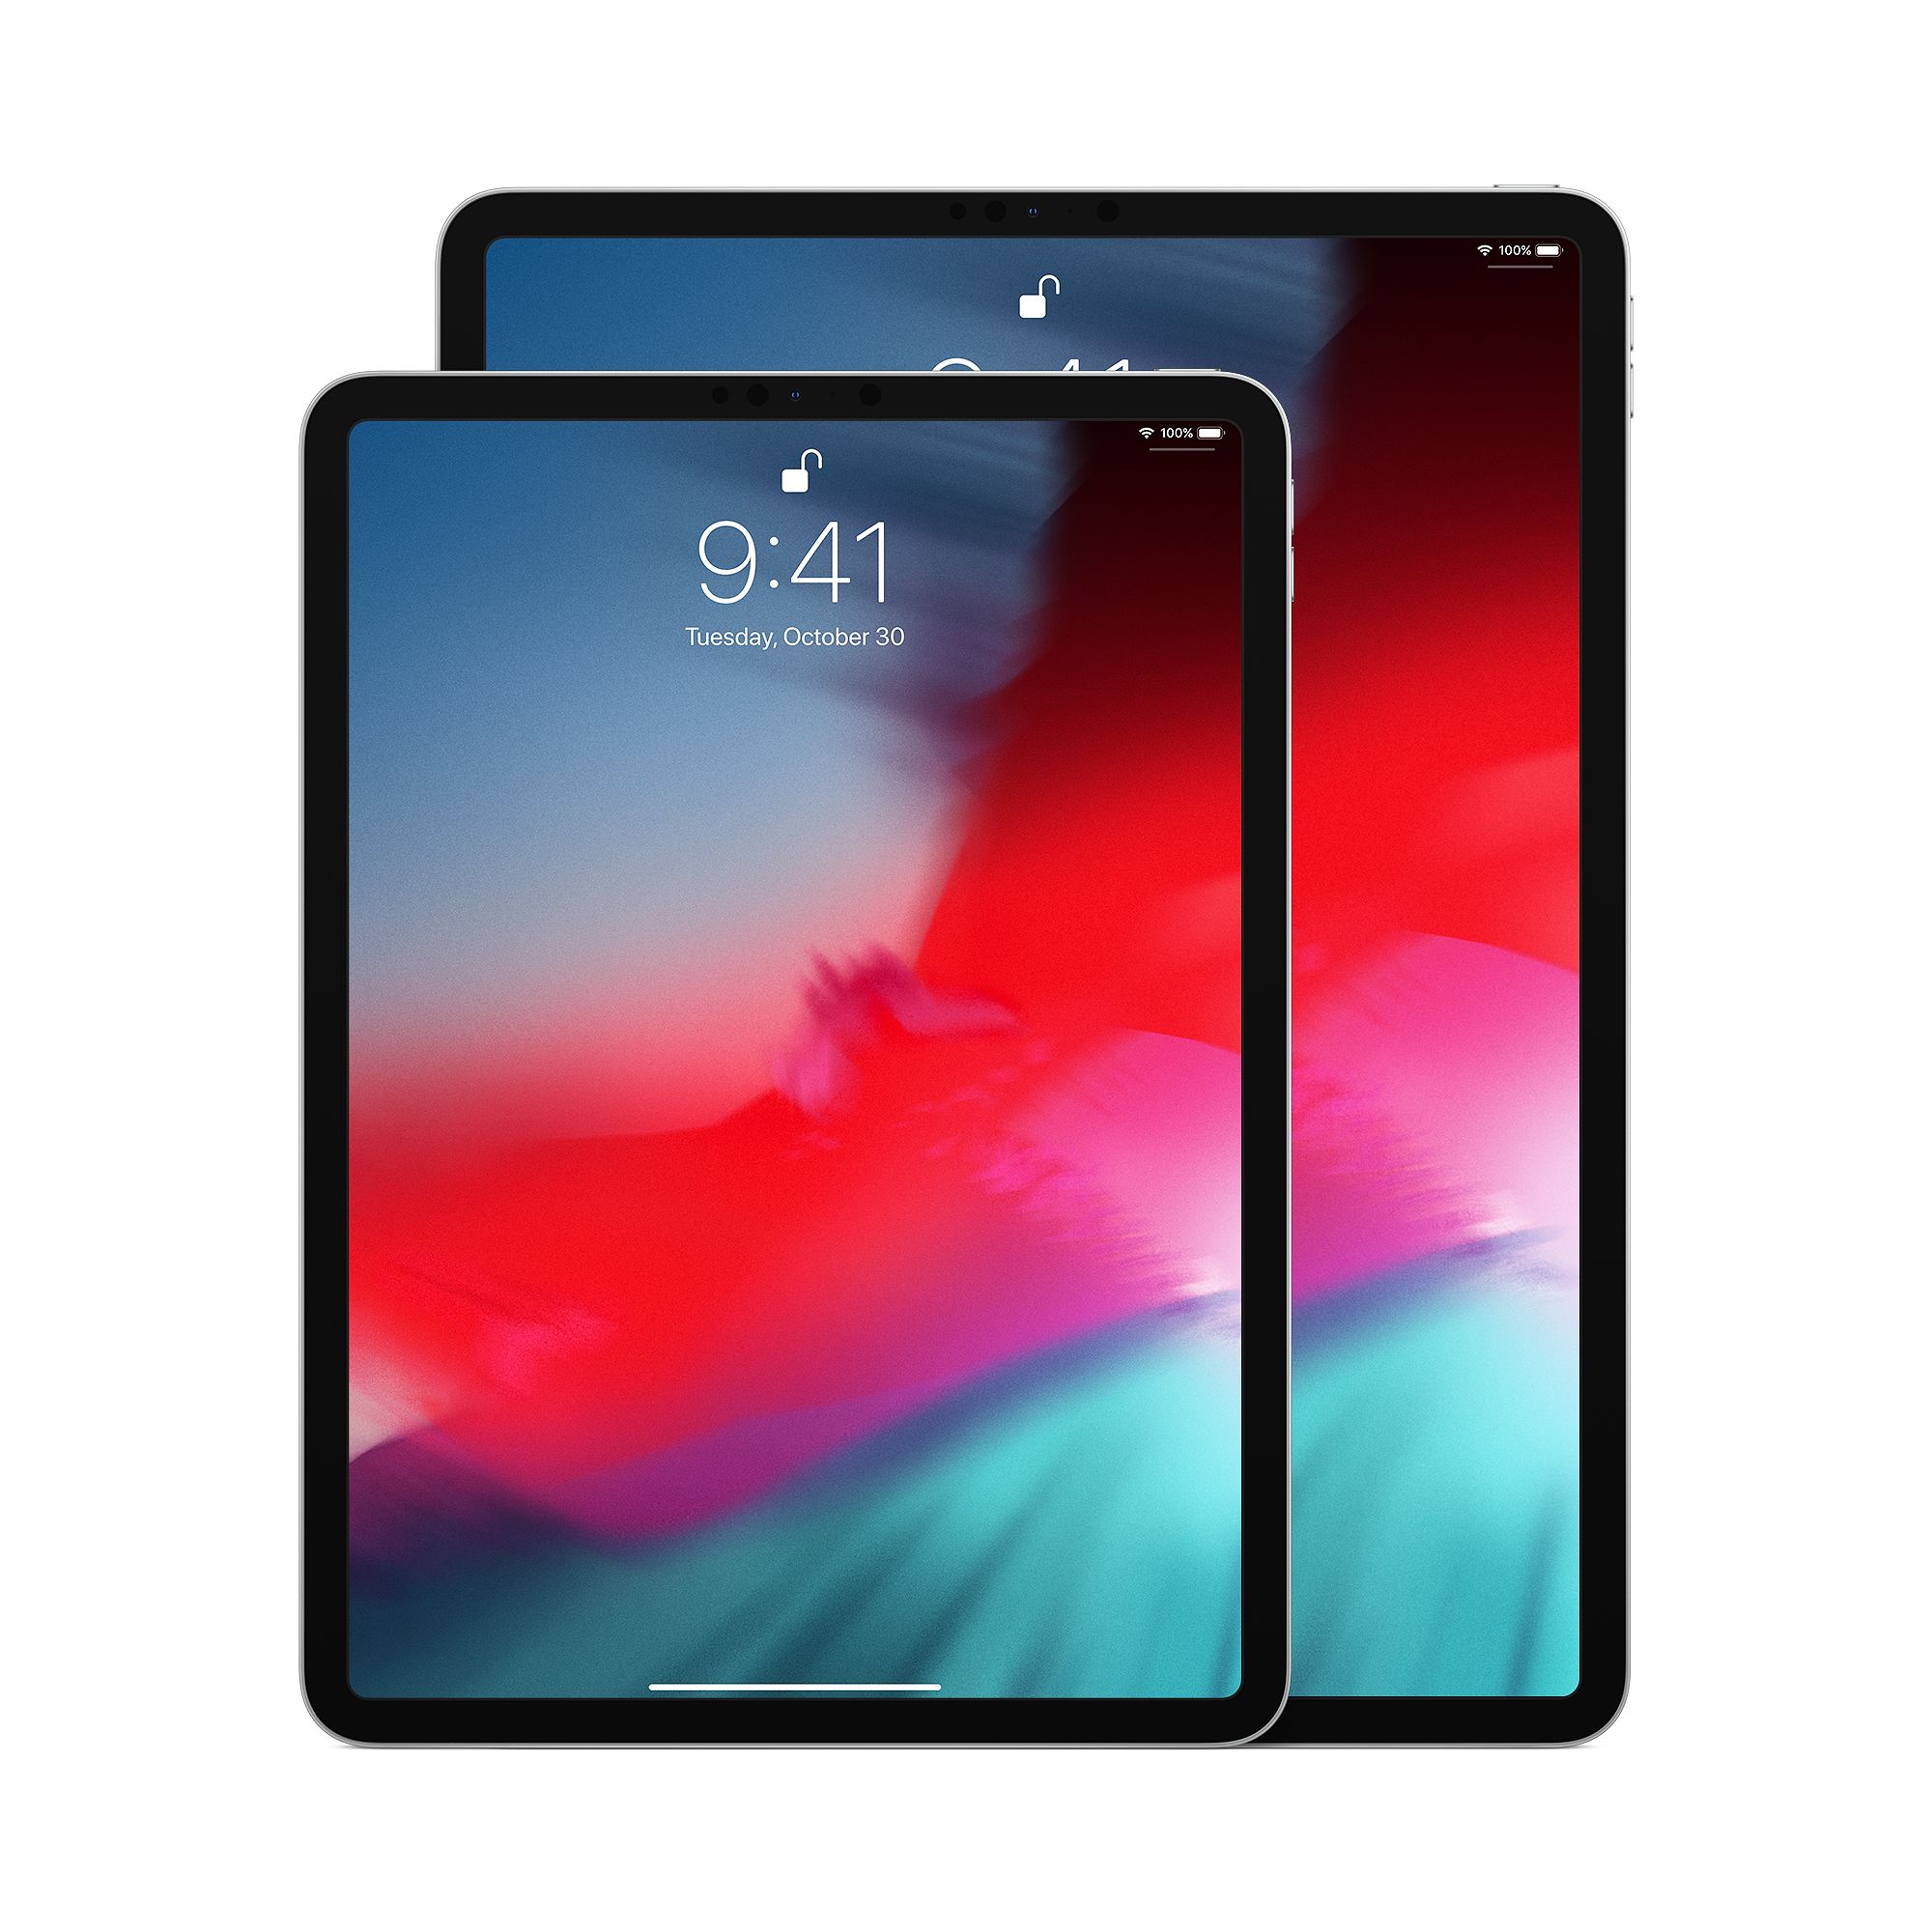 Apple iPad Pro 2019 variants